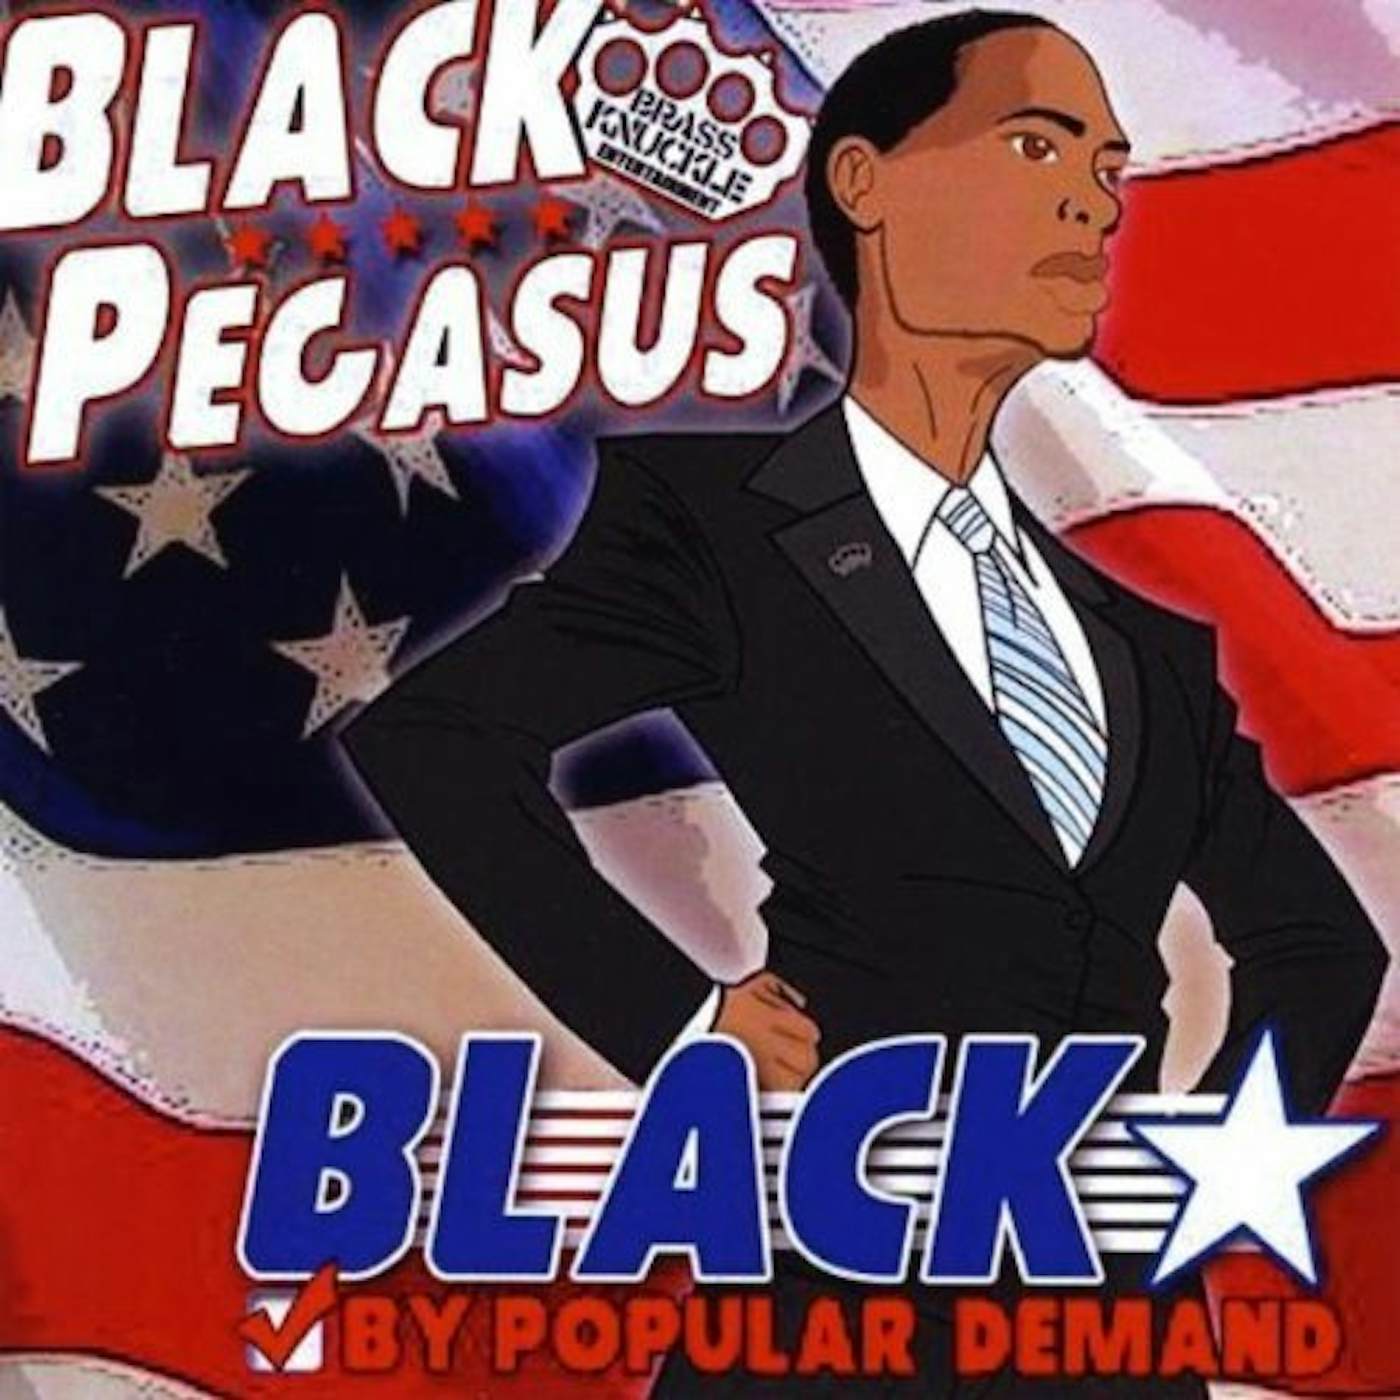 Black Pegasus BLACK BY POPULAR DEMAND CD